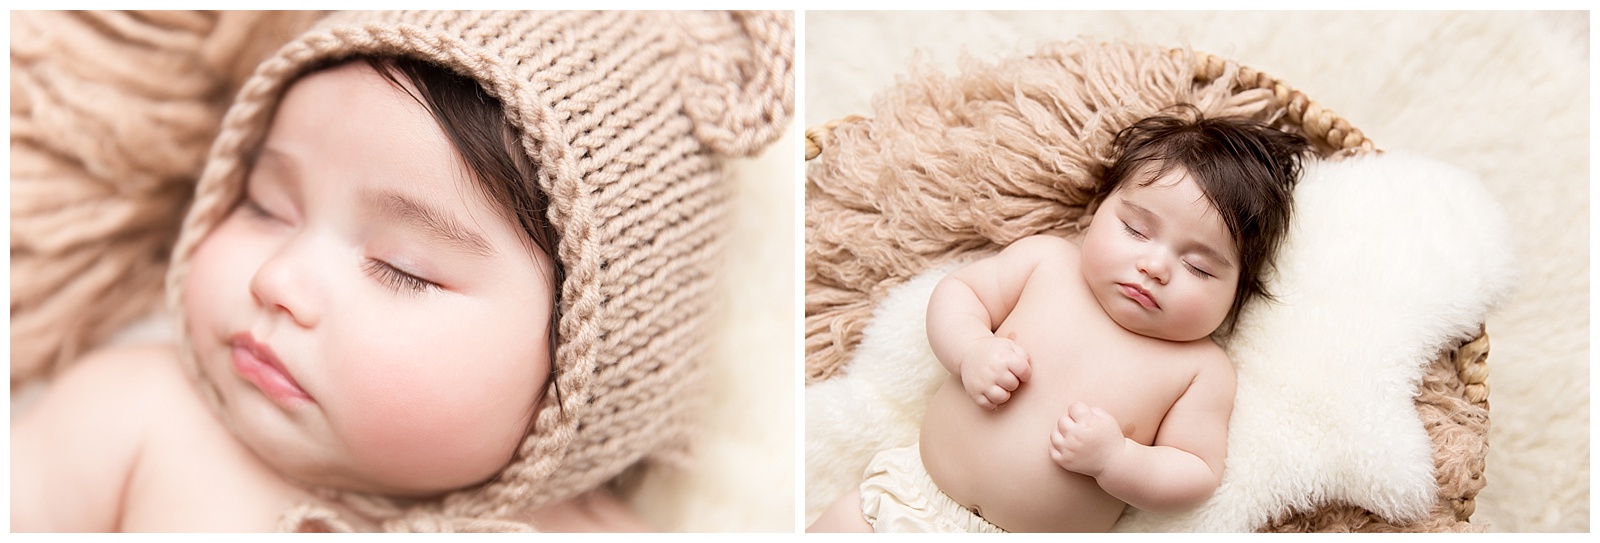 Gilroy 3 month baby Photographer_0888.jpg